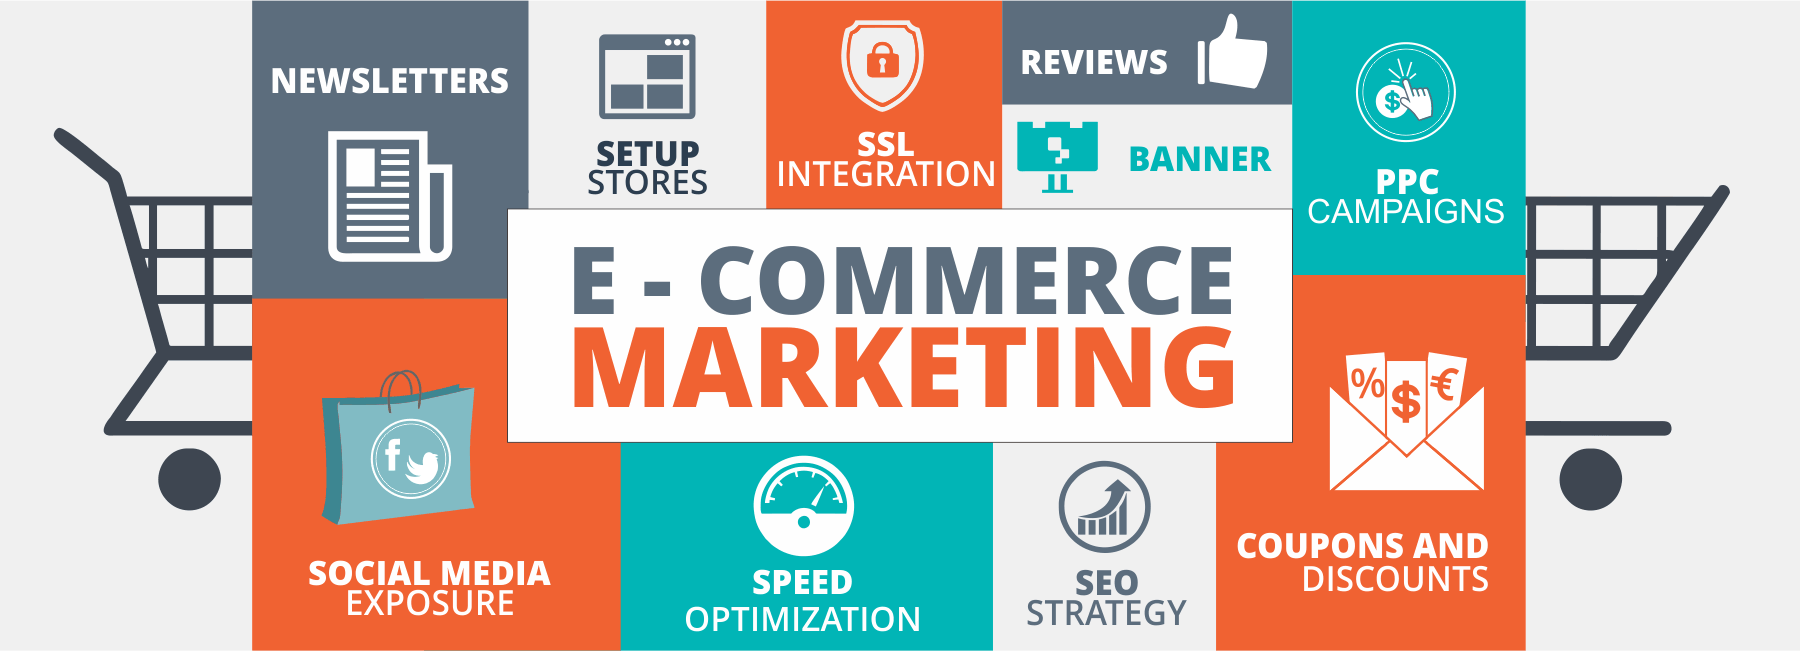 eCommerce Marketing Strategies